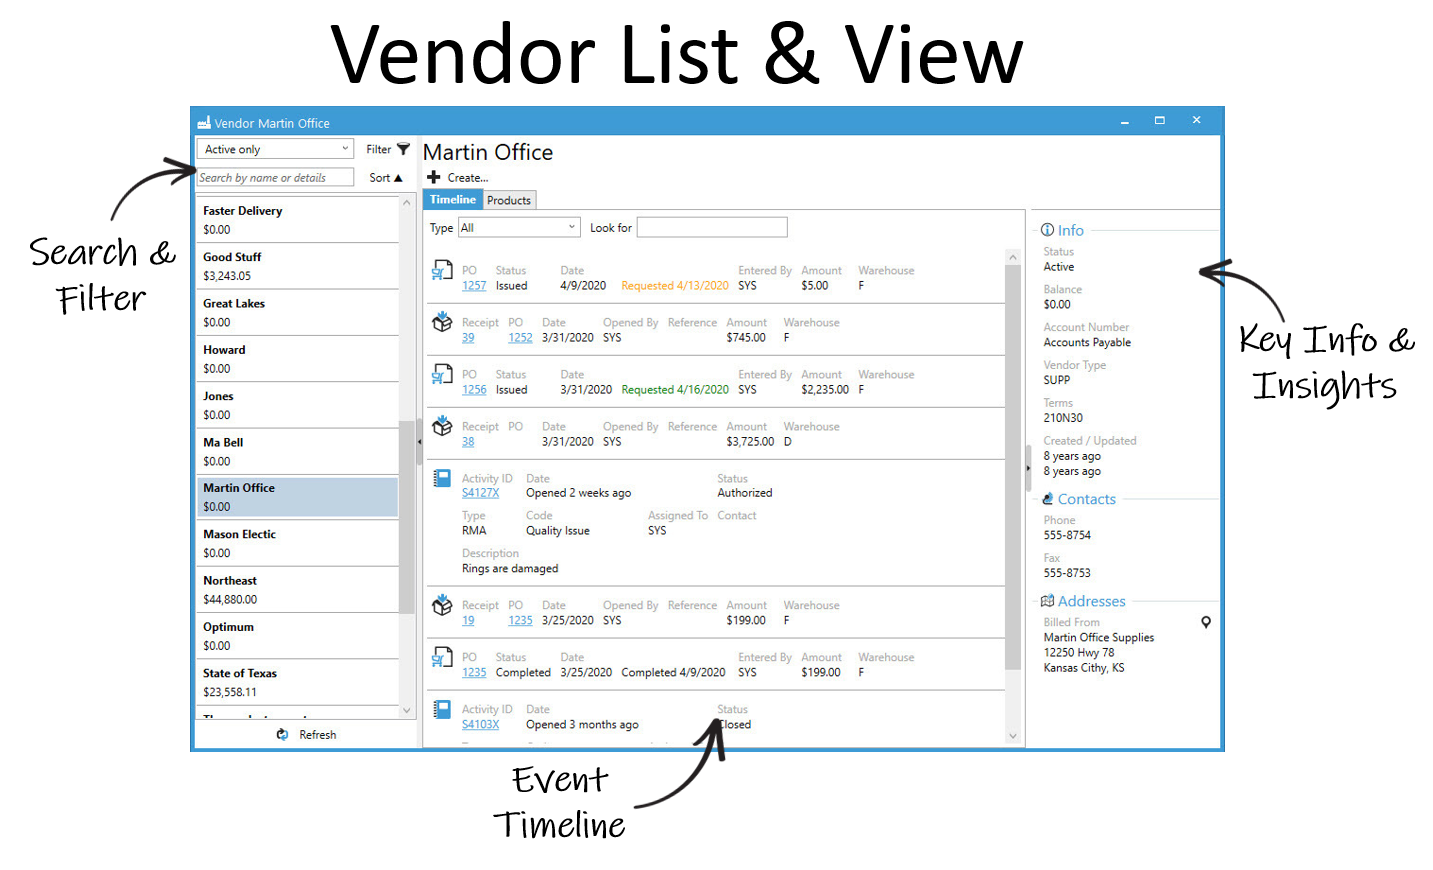 Acctivate Inventory Management Software - Vendor List & View